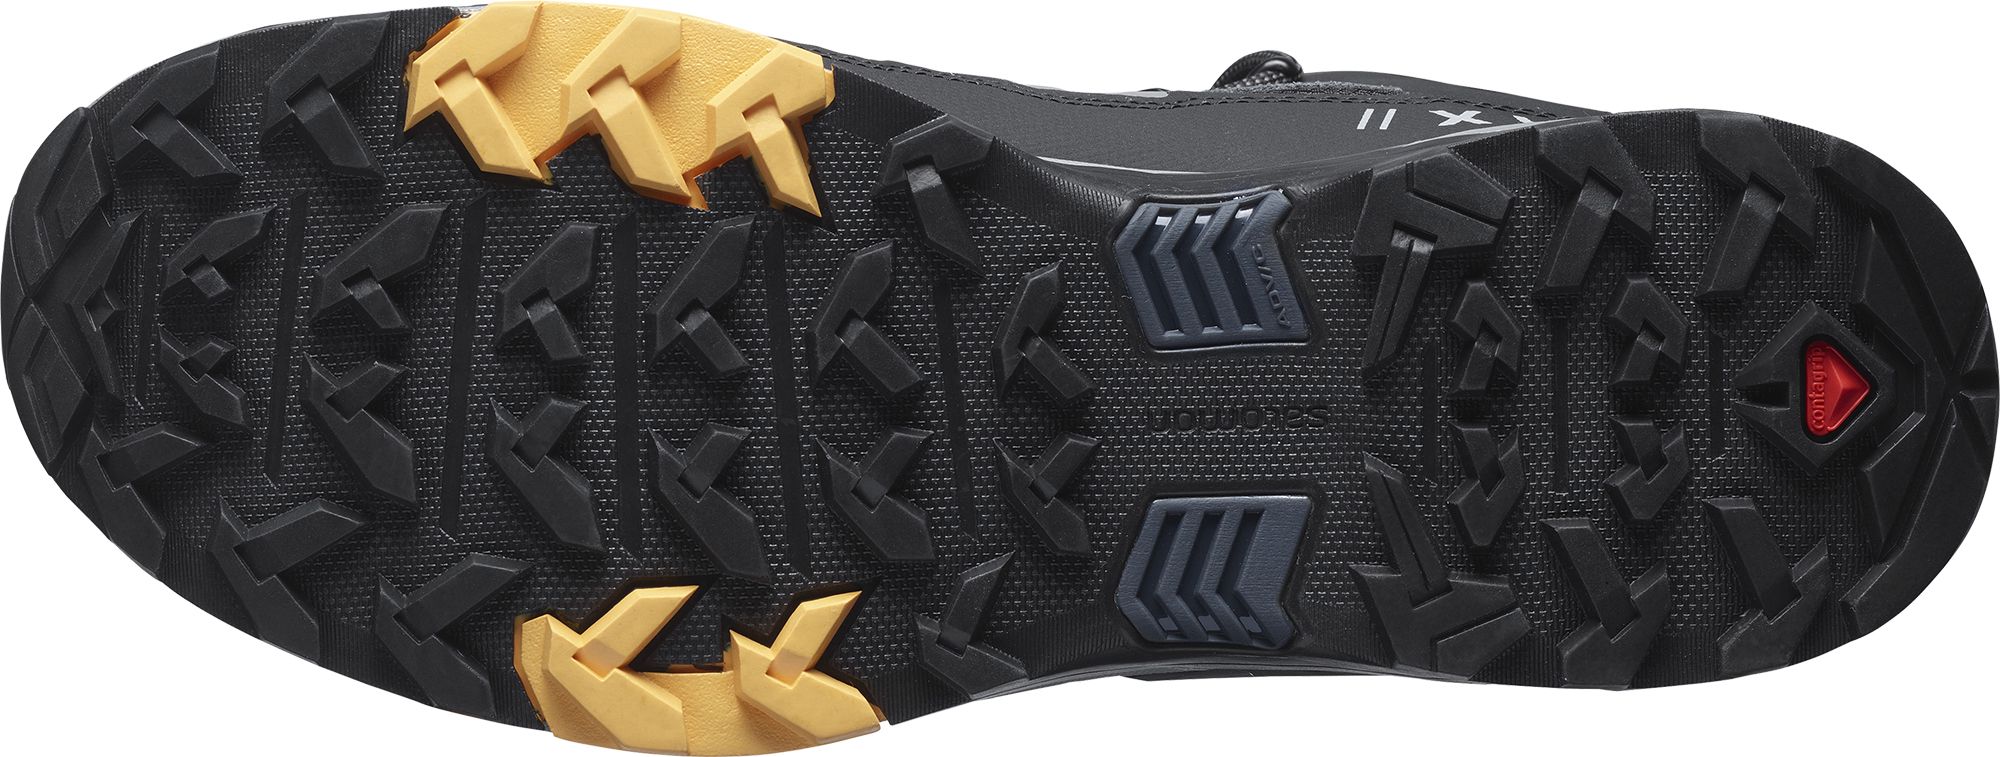 Salomon Men's X Ultra 4 Winter Insulated Waterproof Boots